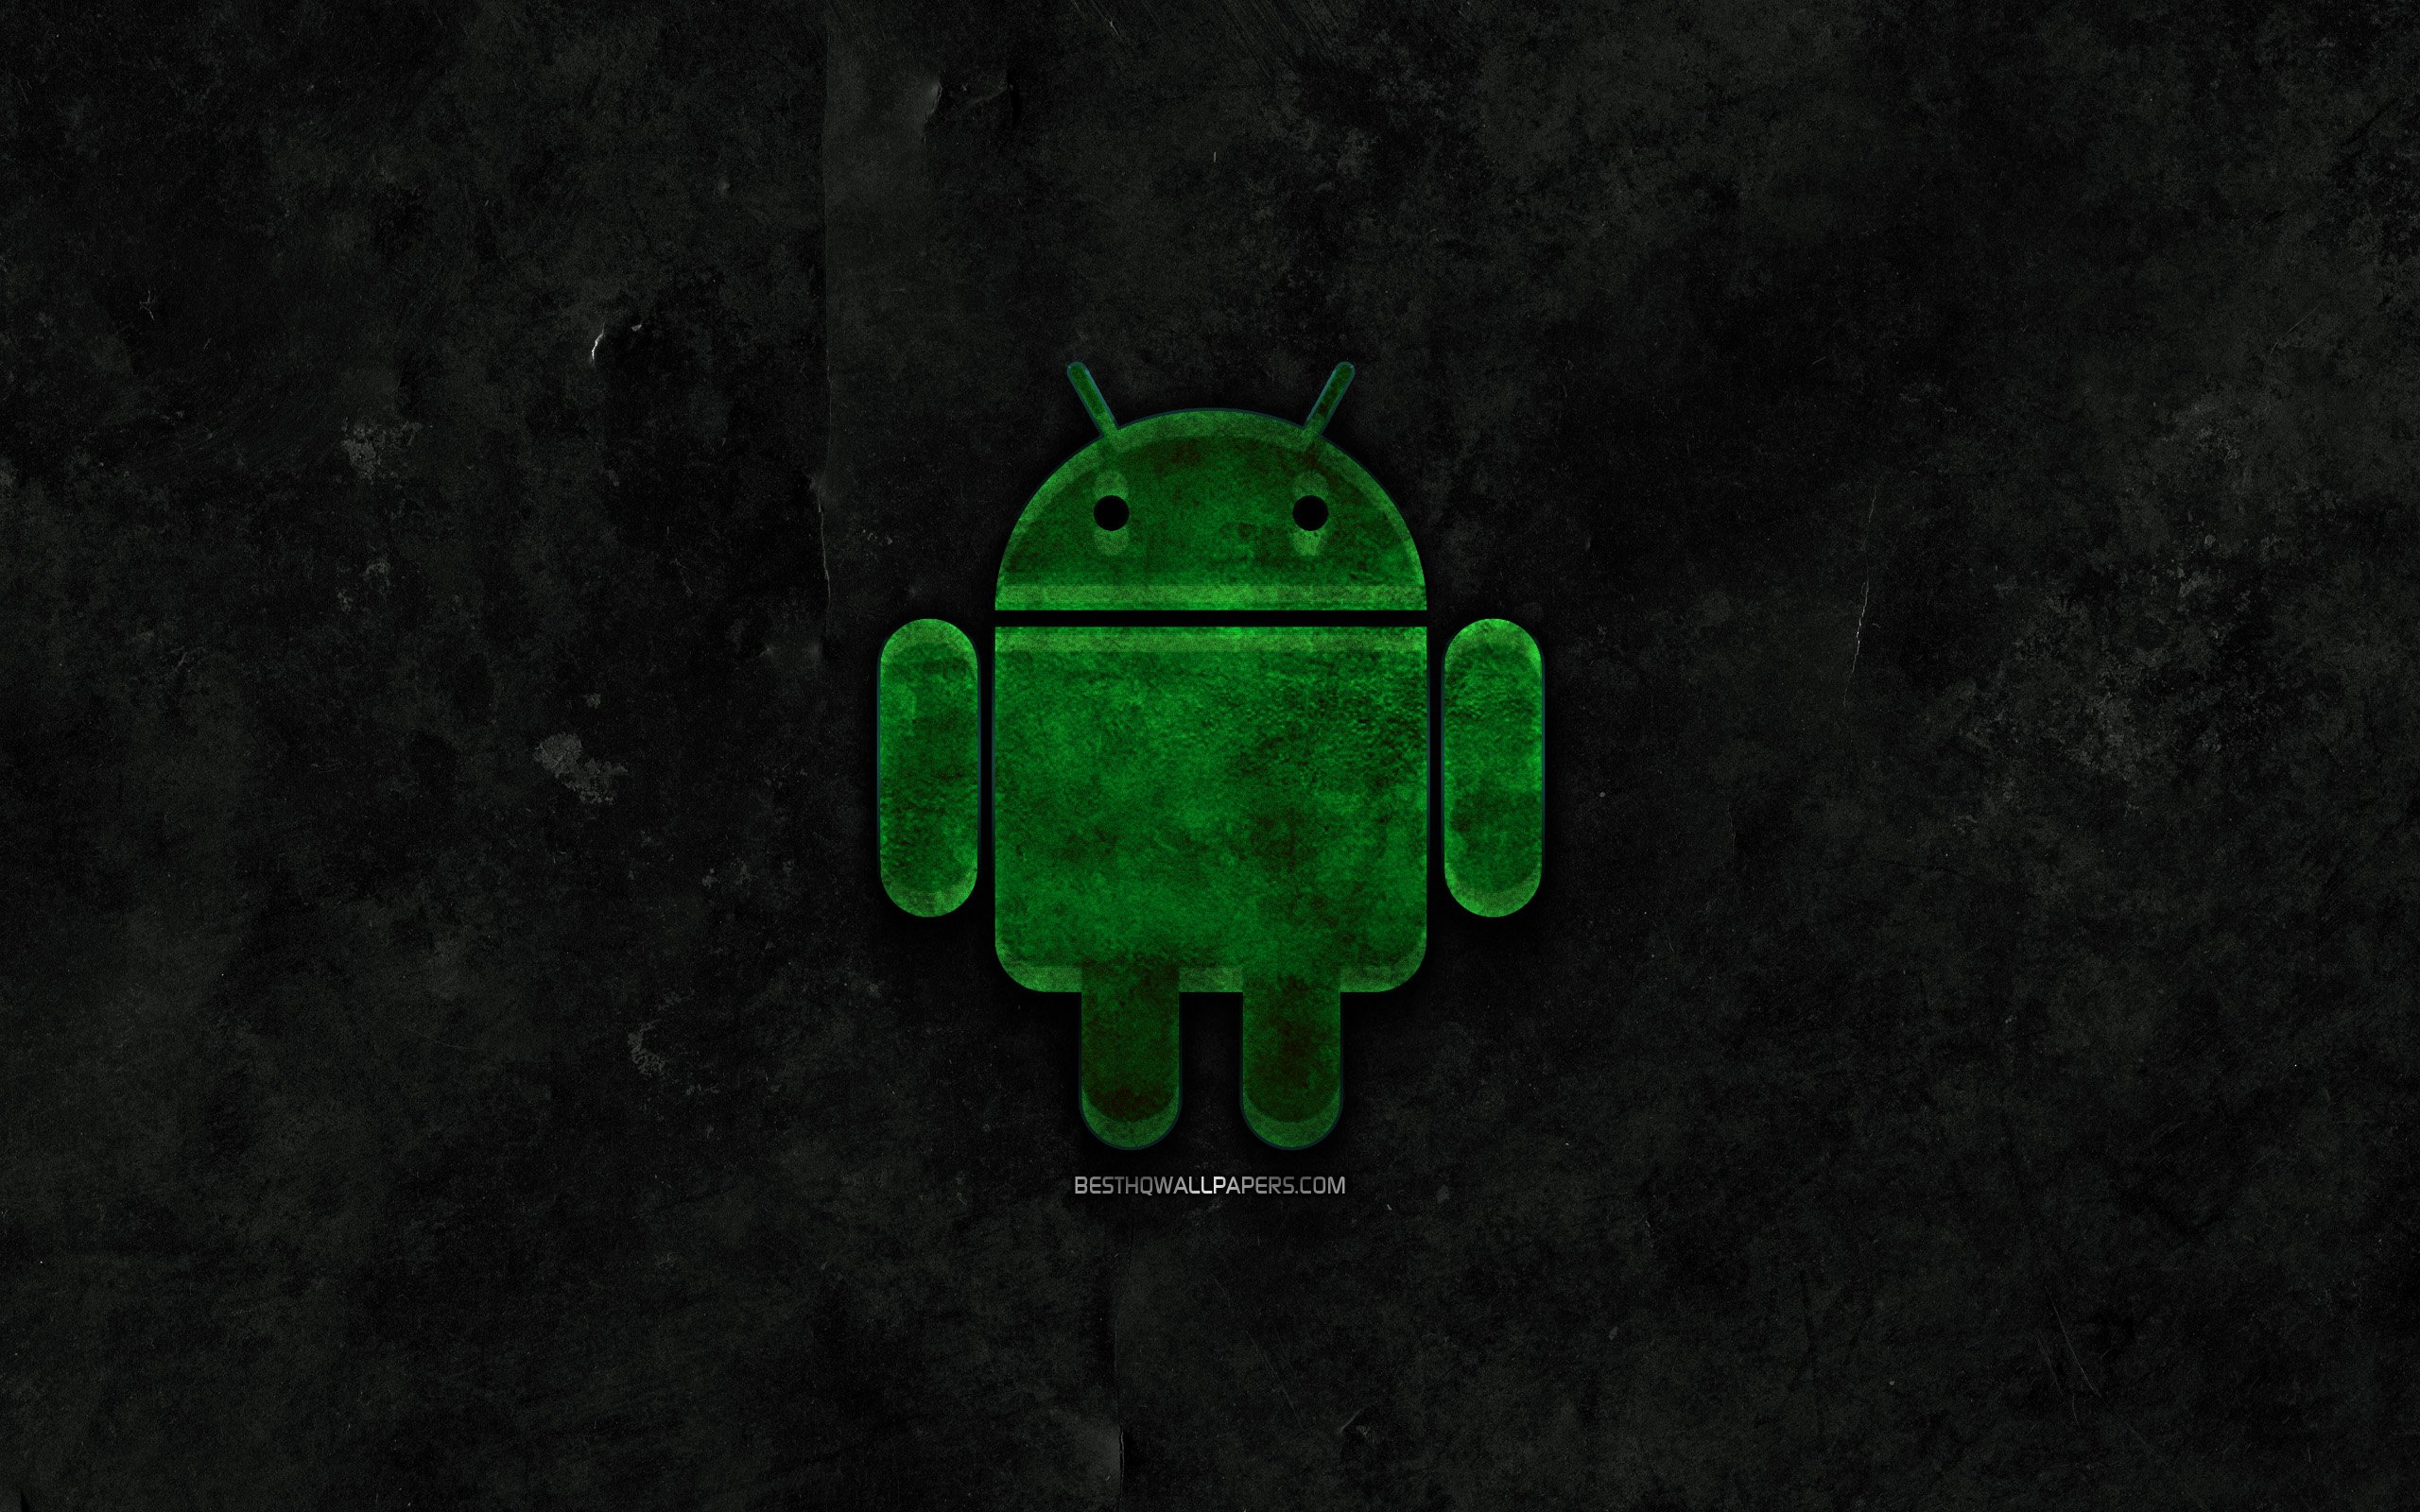 Stones андроид. Логотип андроид. Фон для андроид. Логотип андроид на черном фоне. Логотип андроид на заставку телефона.